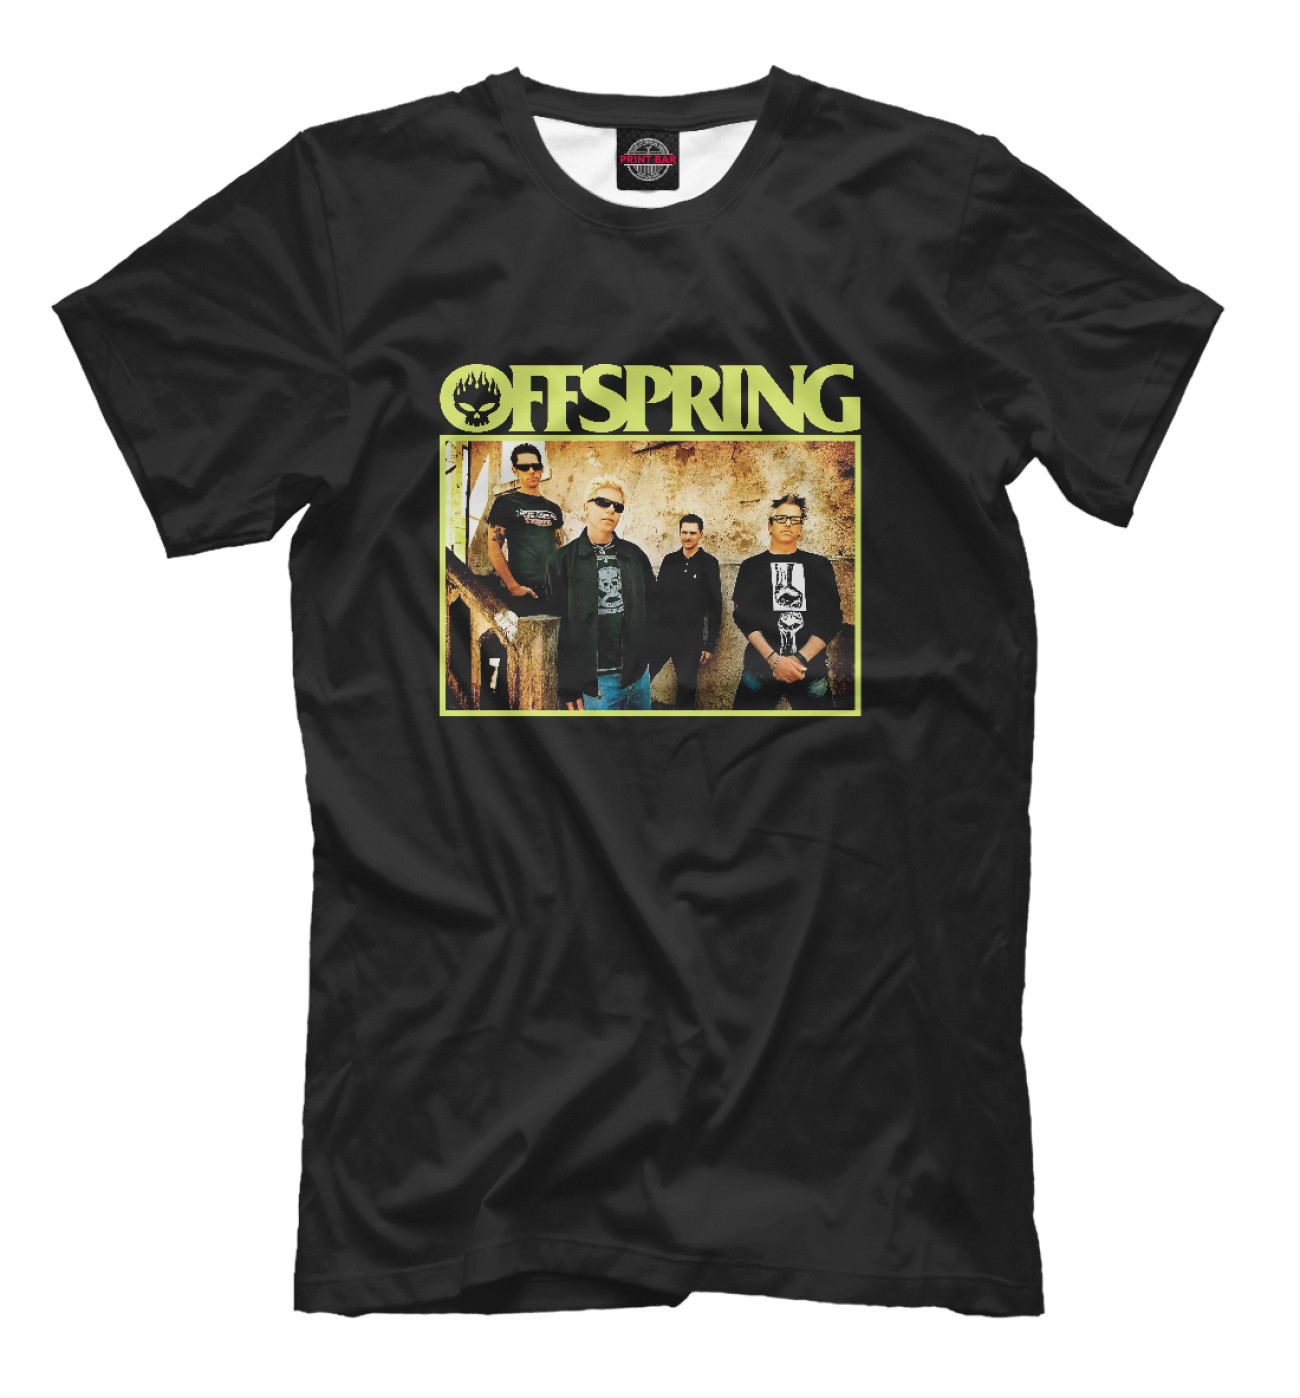 Мужская Футболка The Offspring, артикул: OFS-731126-fut-2